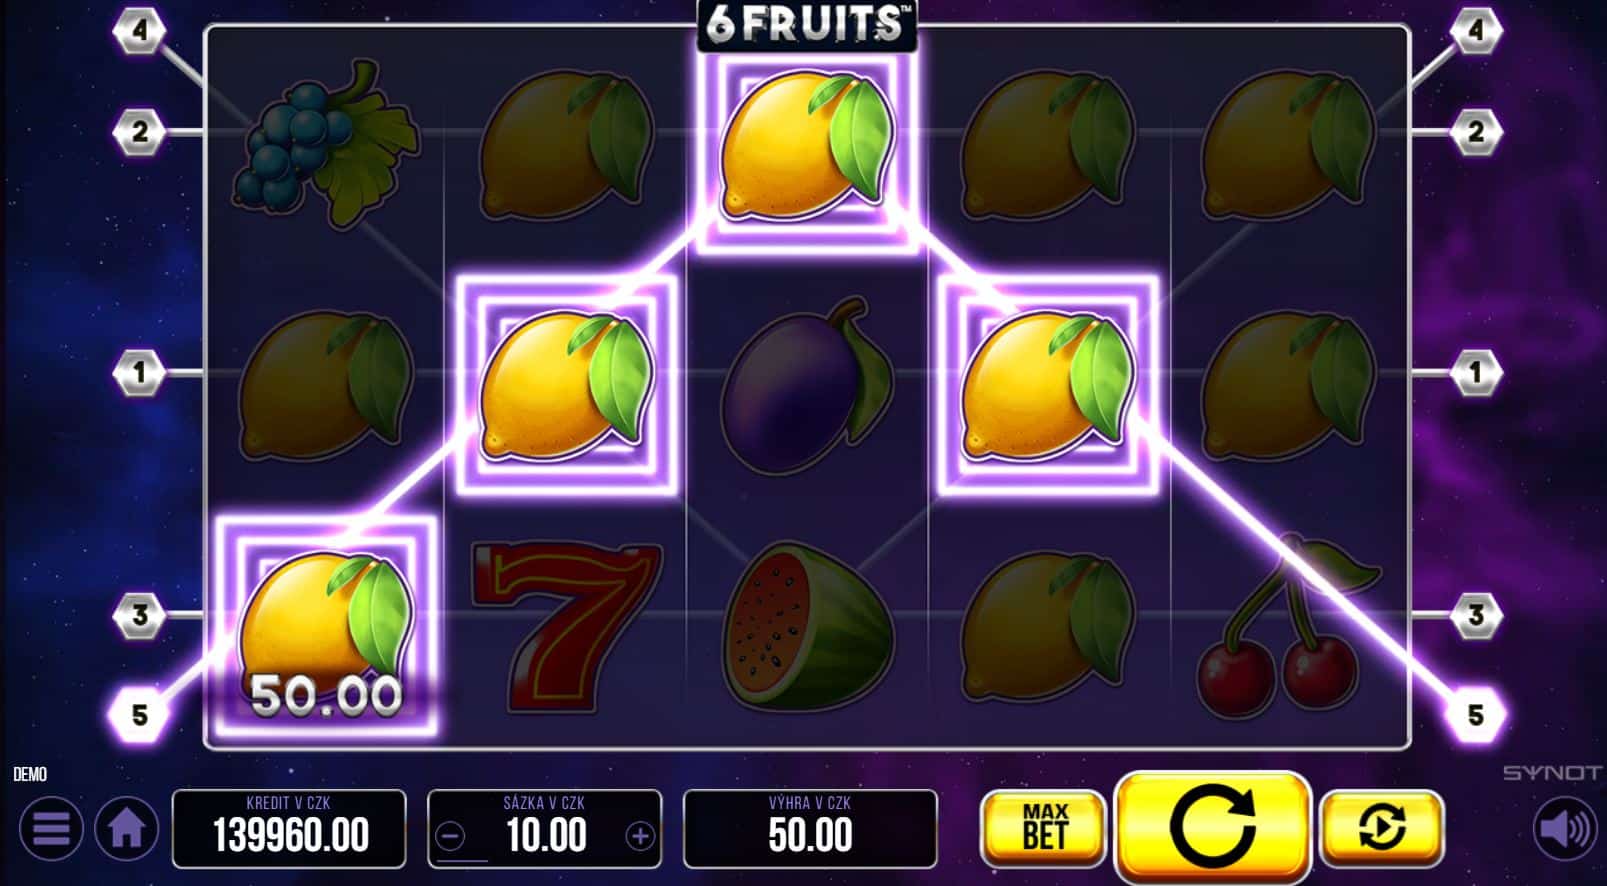 Téma a symboly 6 Fruits